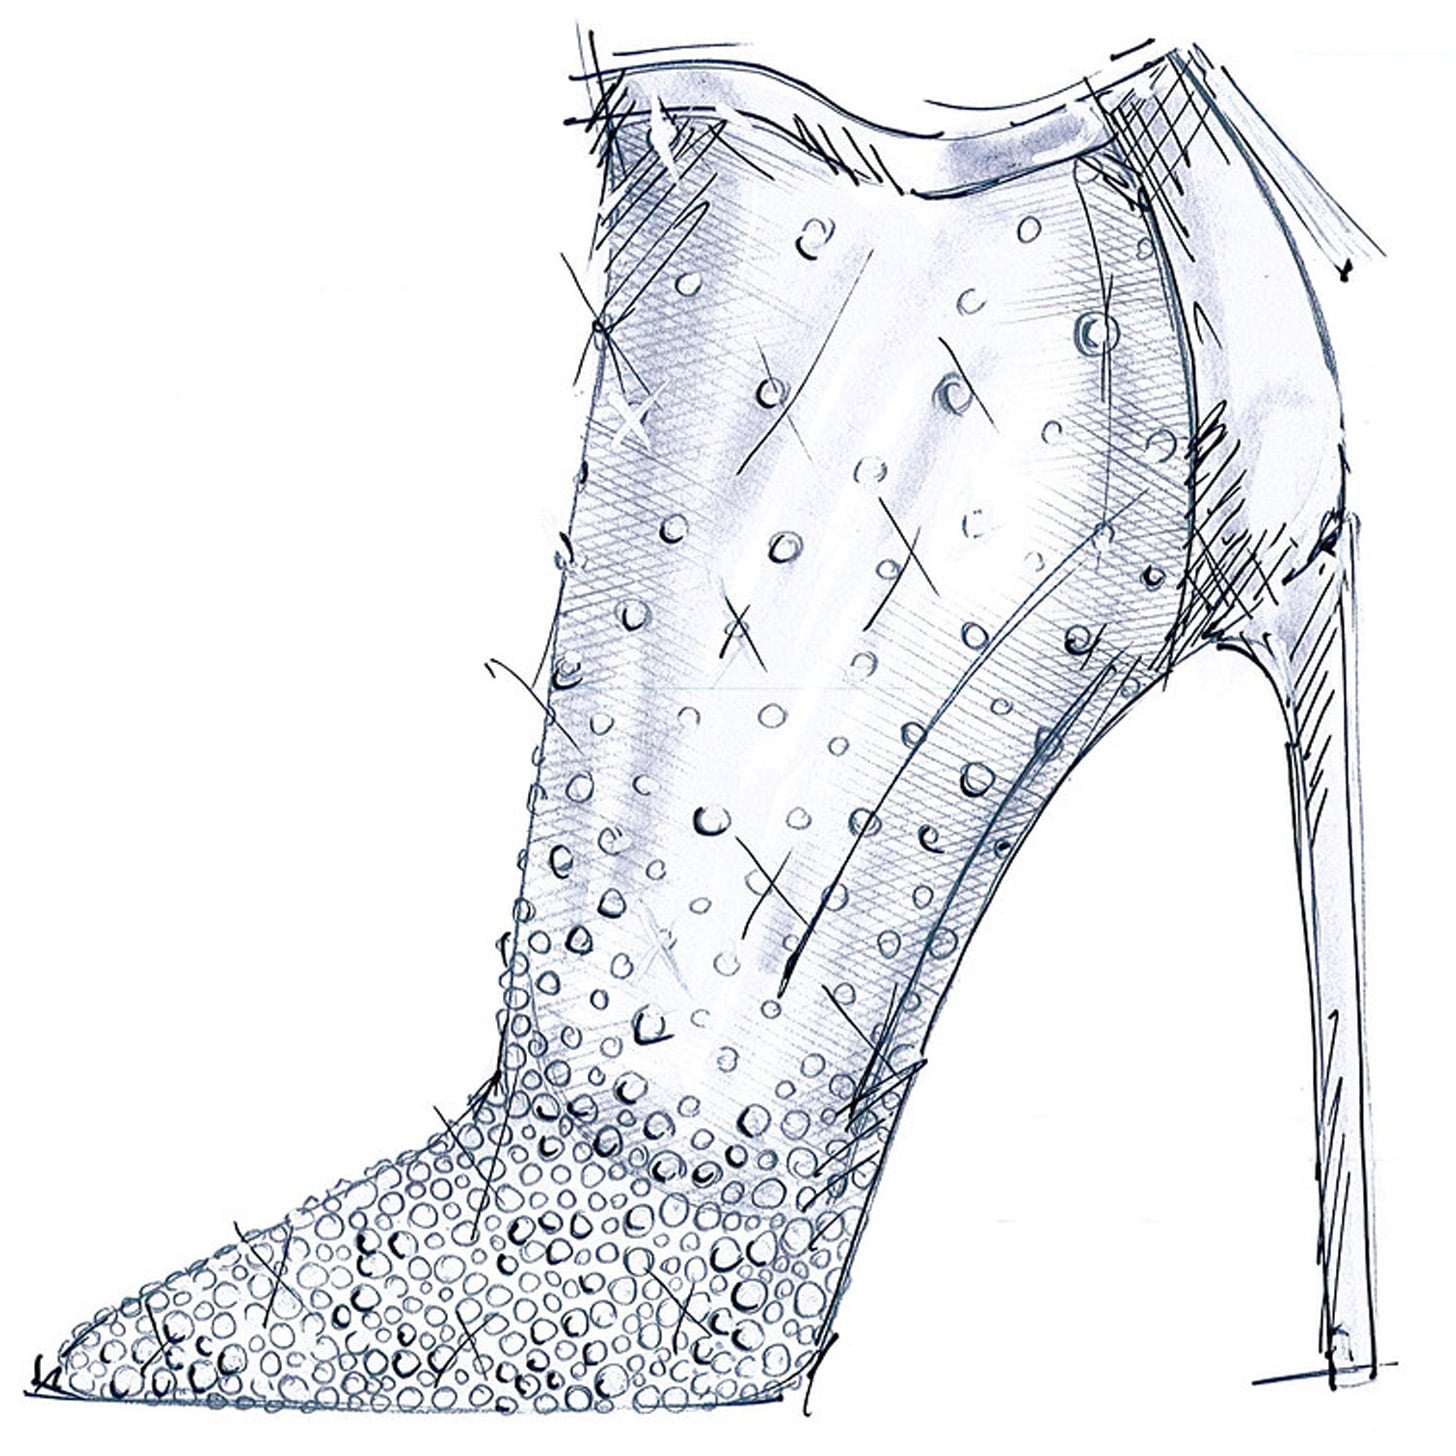 Jimmy Choo's Cinderella Crystal Shoes: Live Like a Fairy Tale Character